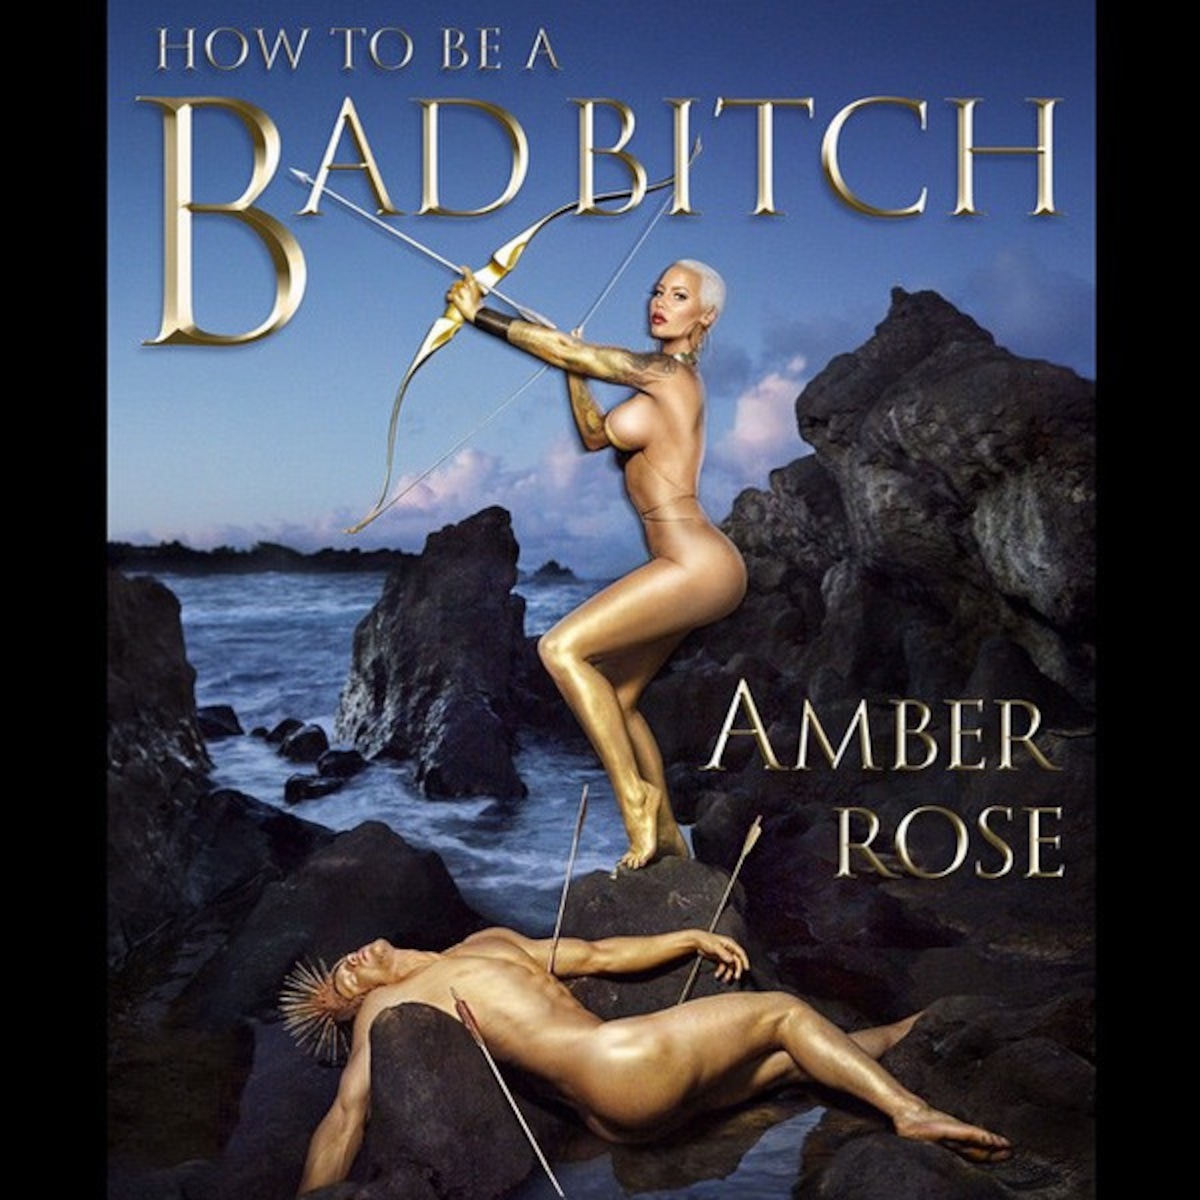 Amber rose completely naked